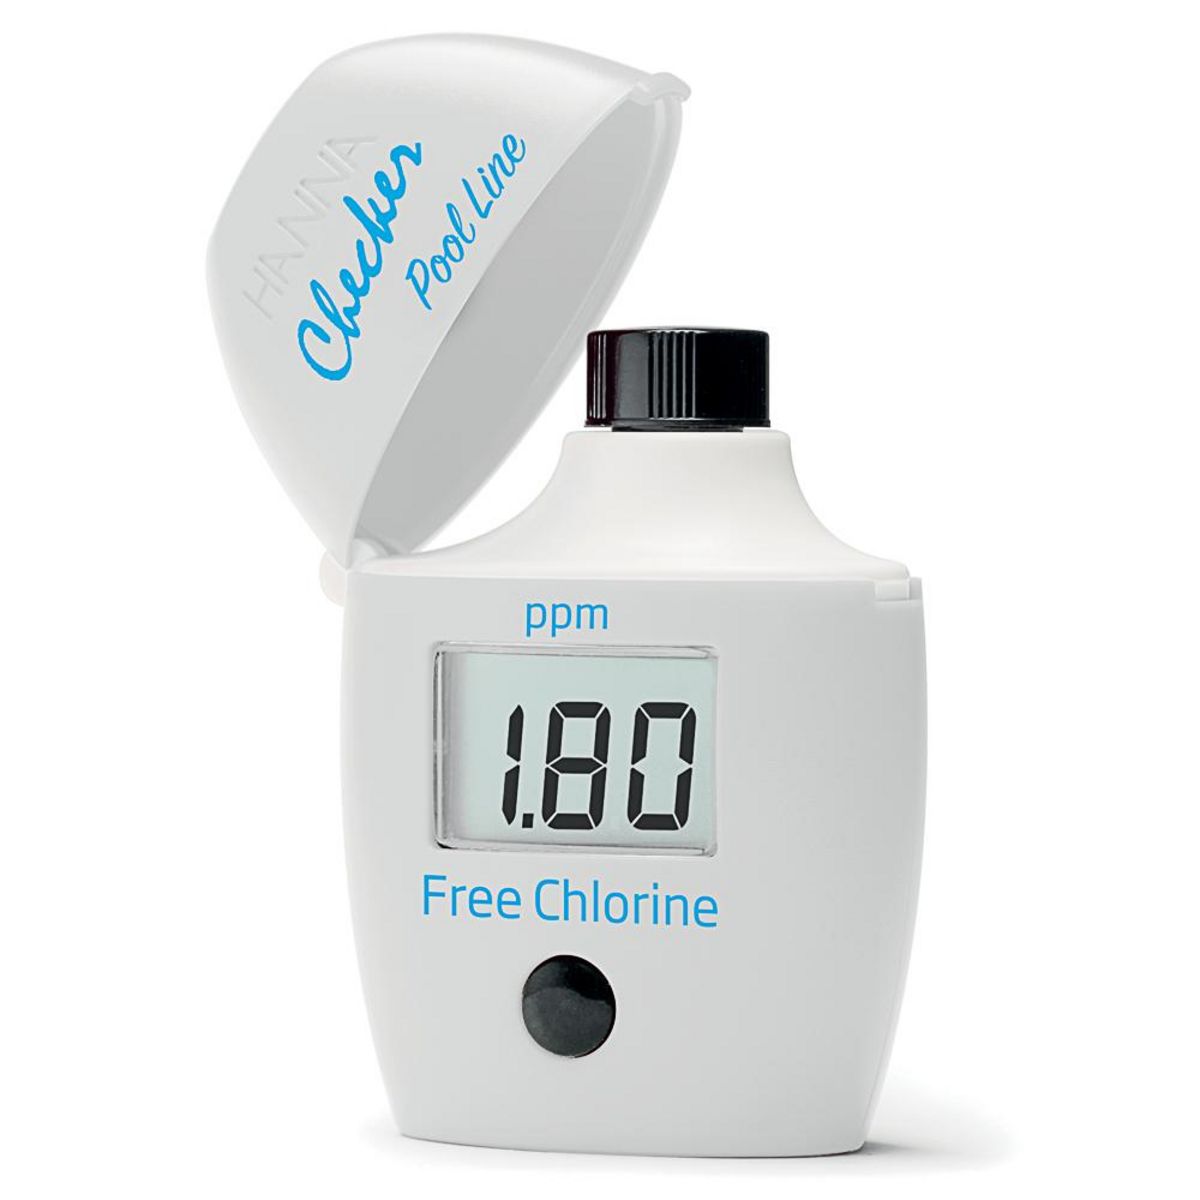 Hanna instruments Mini photomètre chlore libre ou chlore total (jusqu'à 2,50 mg/l) - hi7014